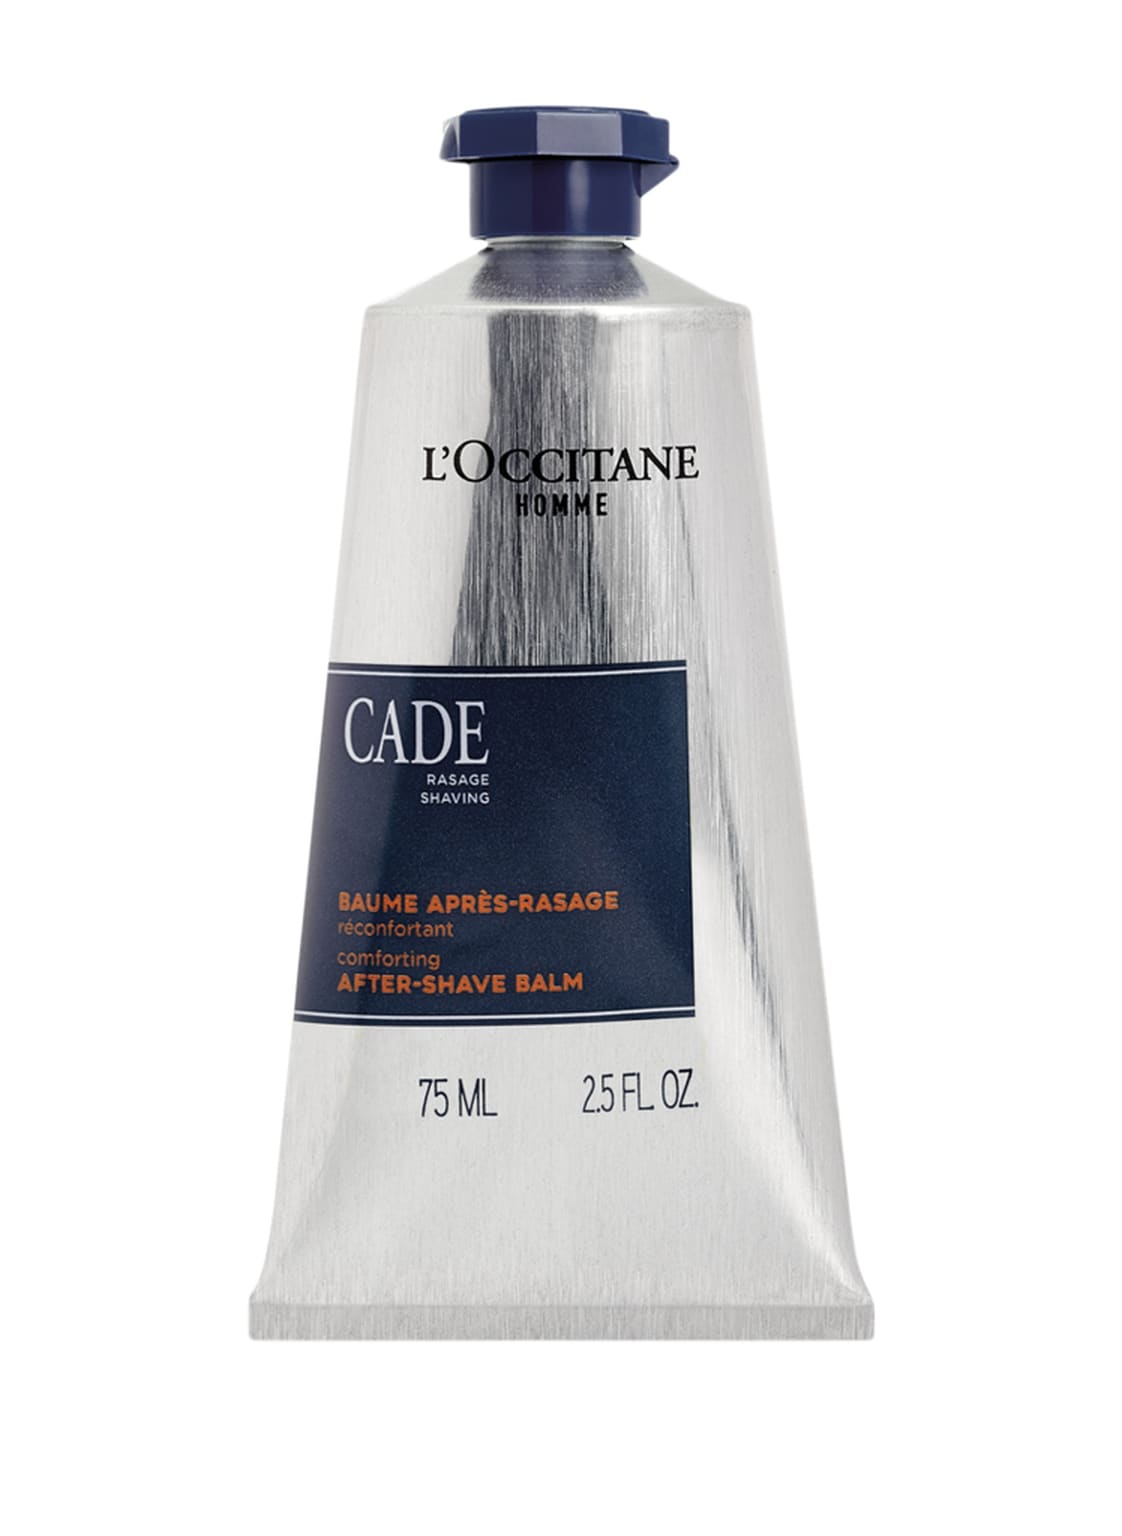 L'occitane Cade After-Shave Blam 75 ml von L'Occitane